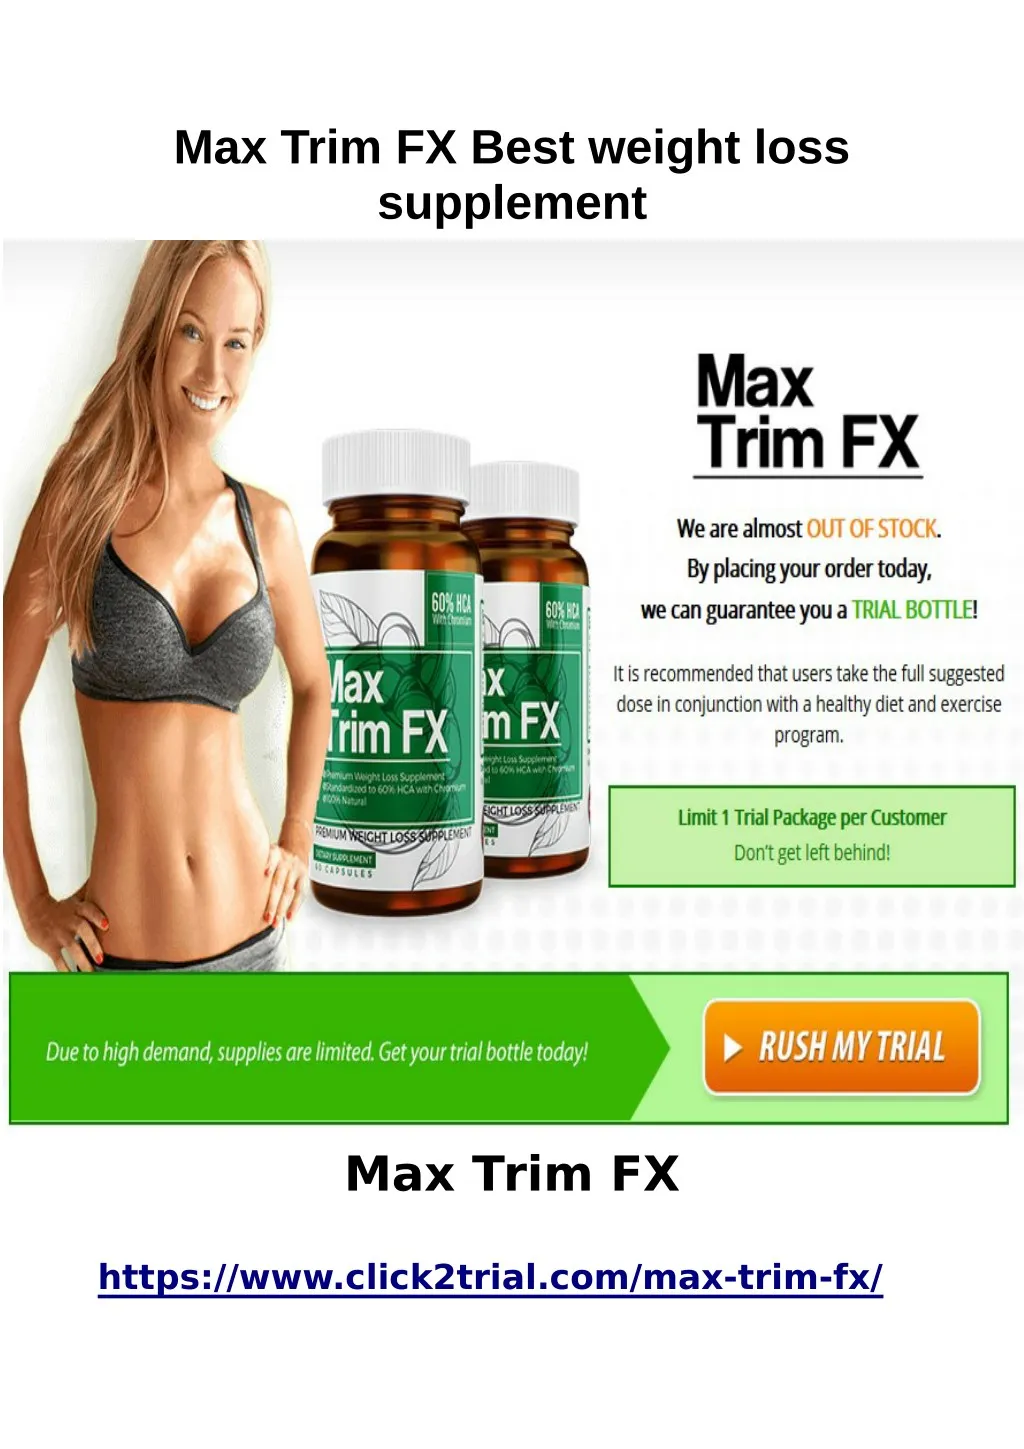 max trim fx best weight loss supplement